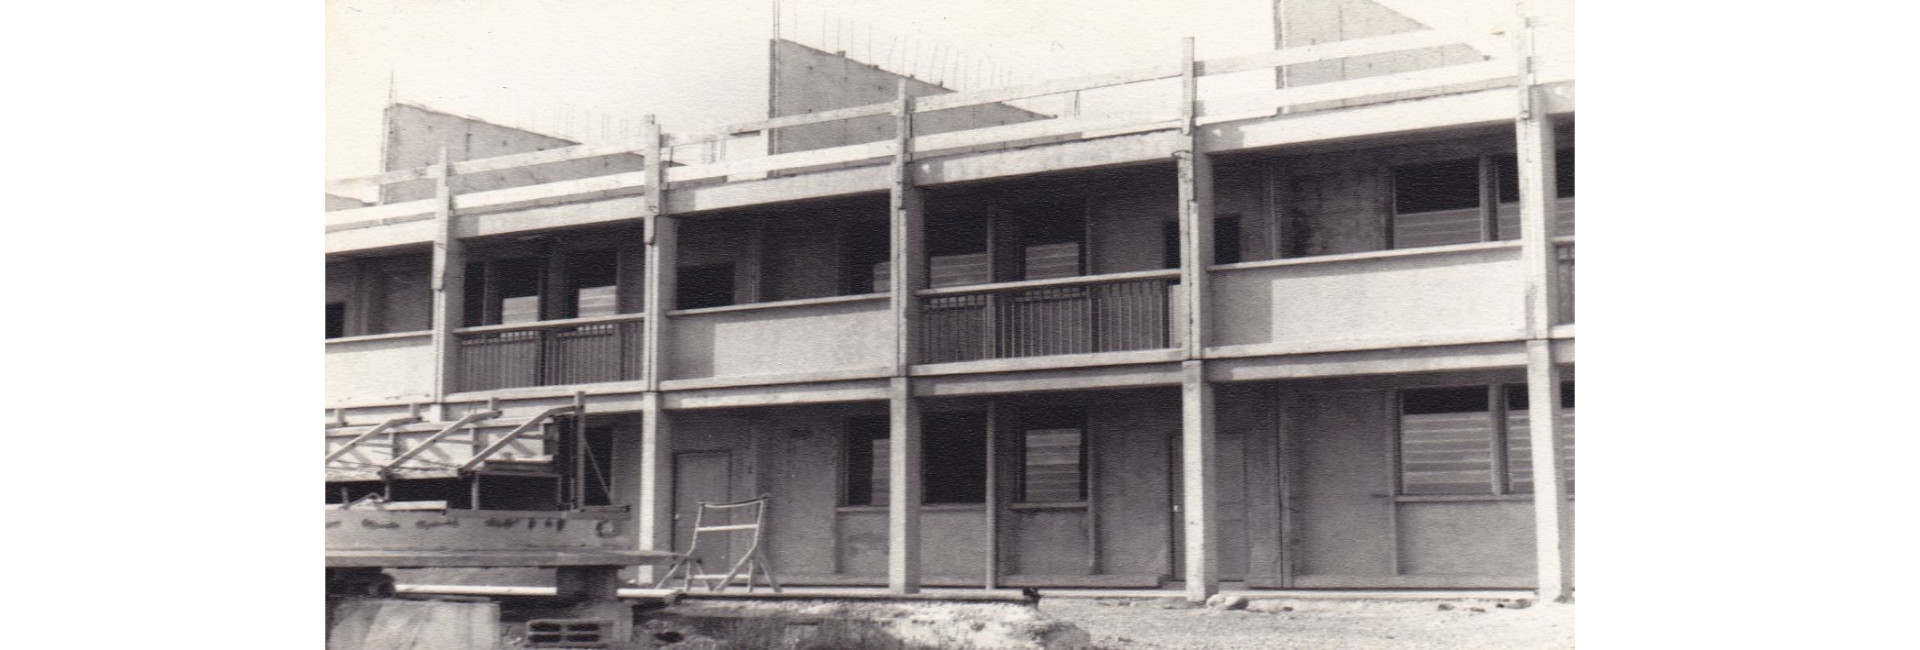 Construction 1975